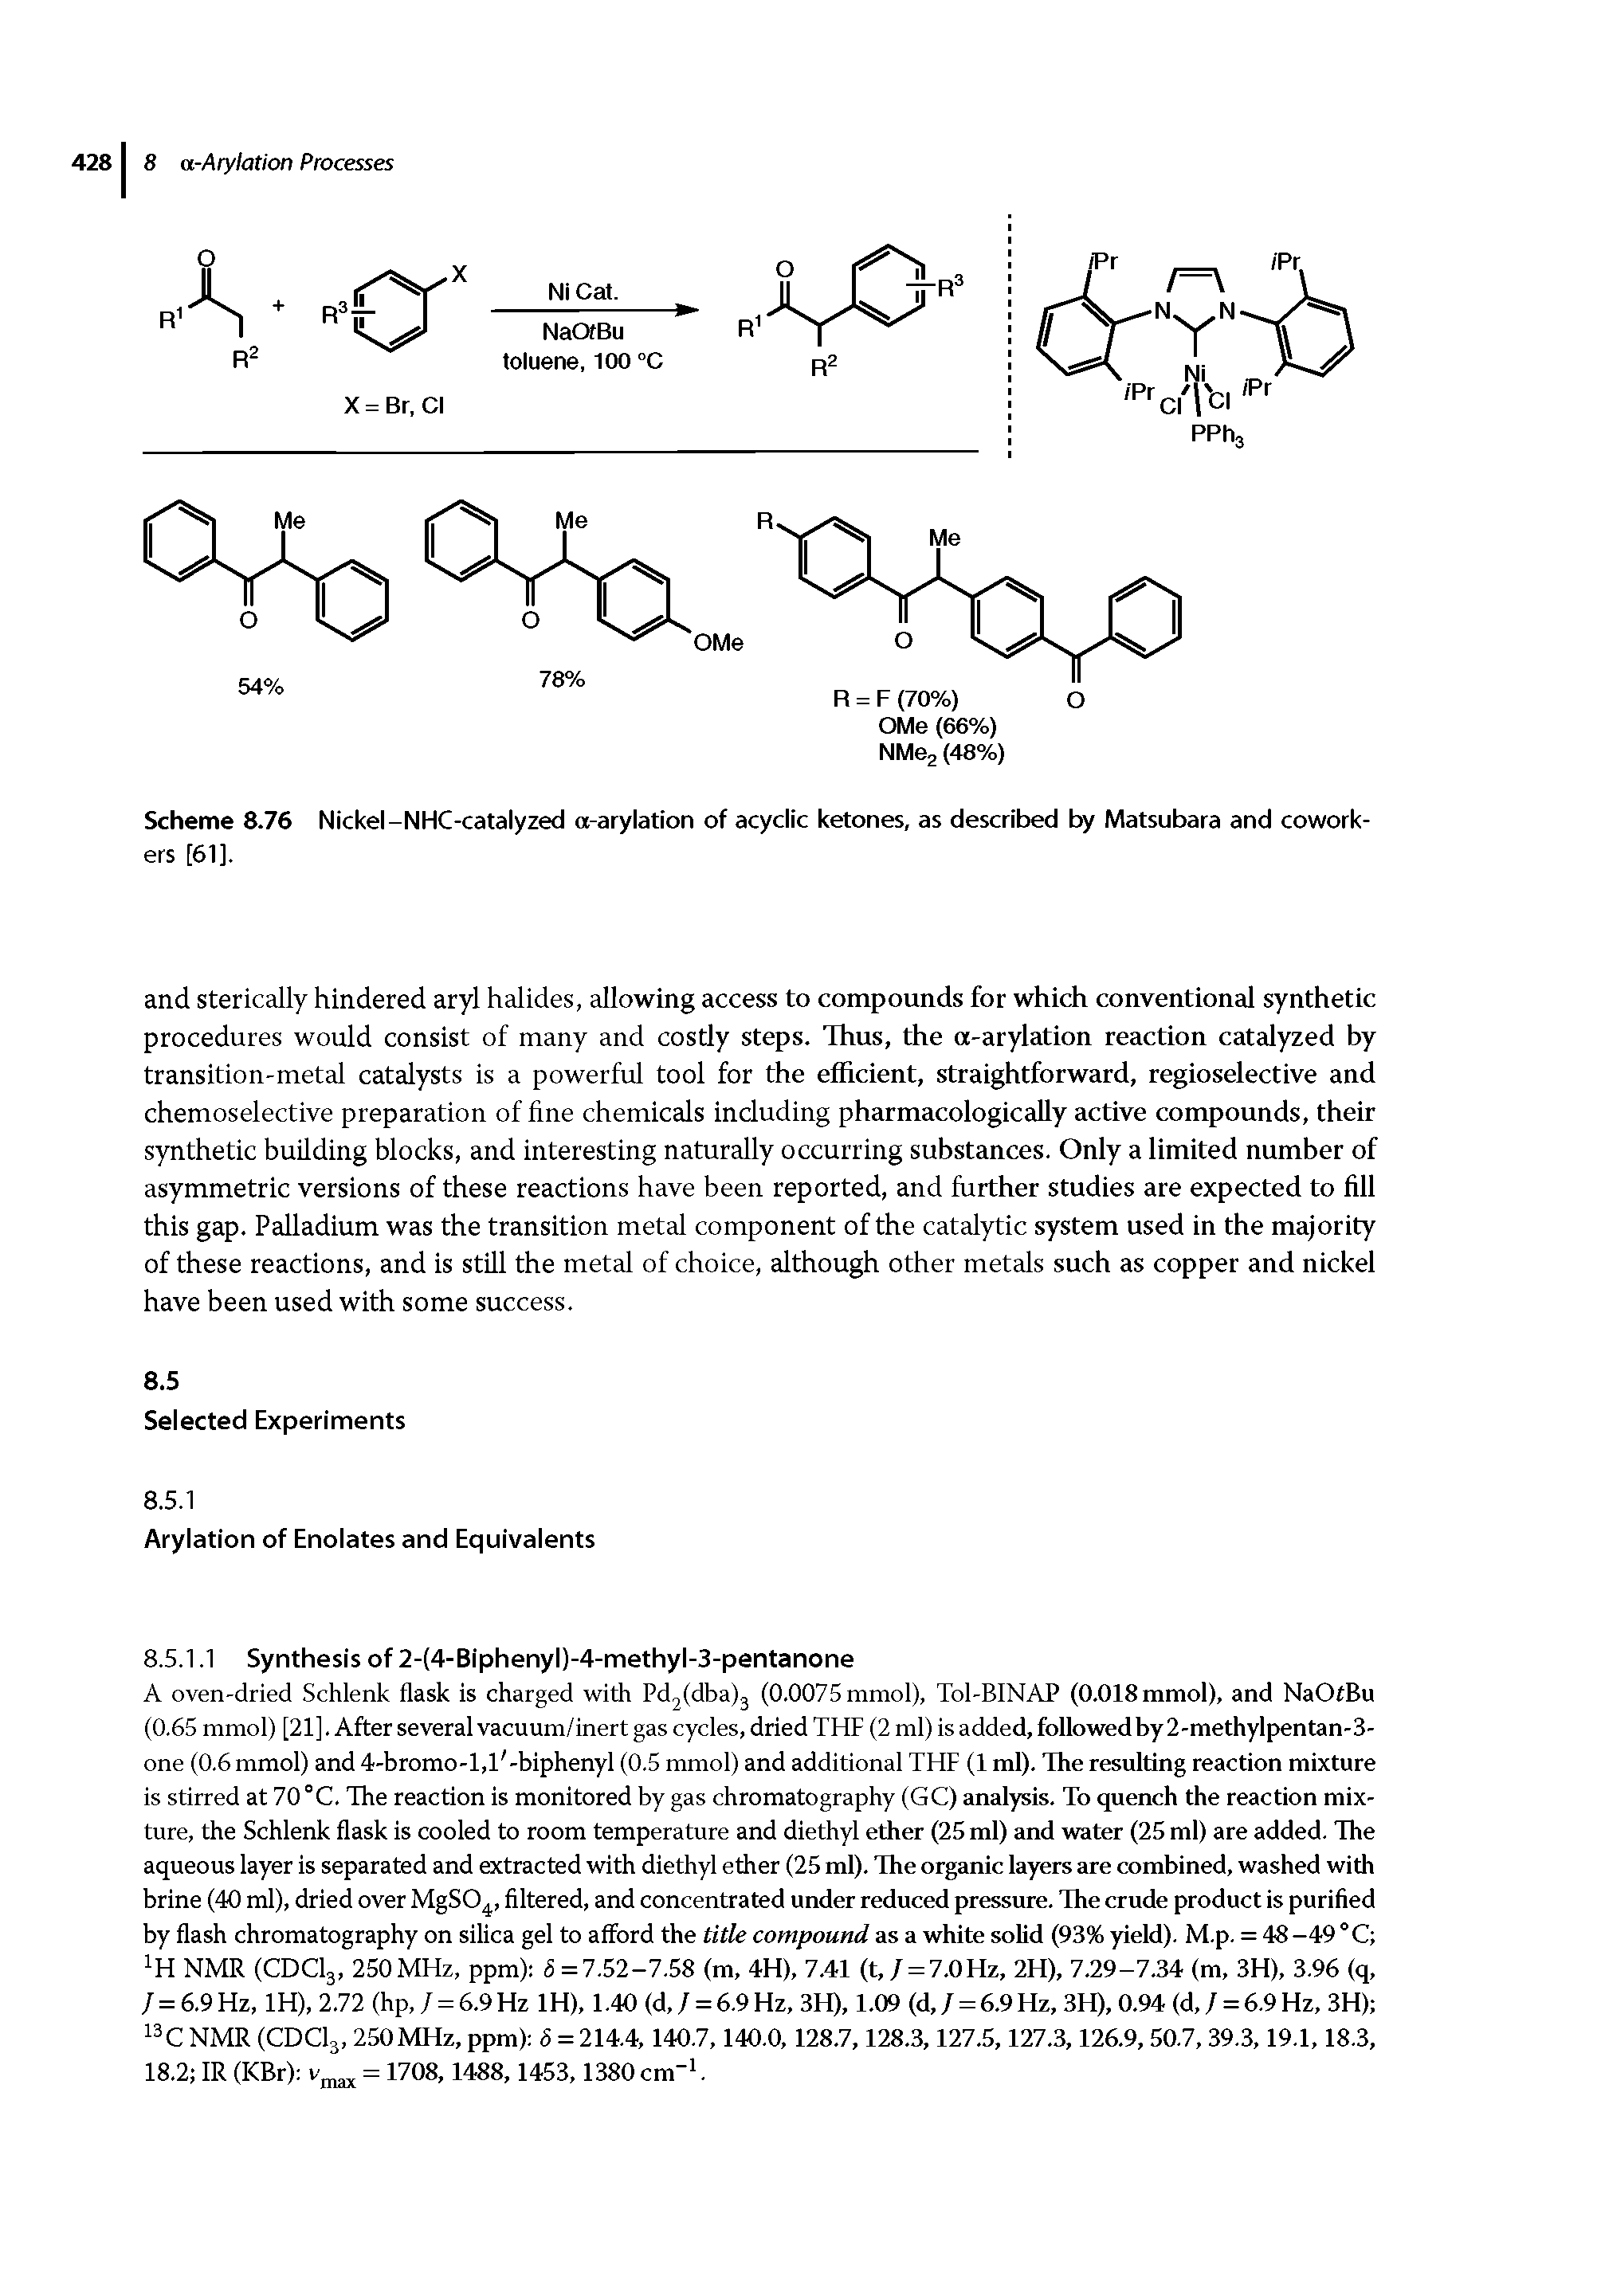 Scheme 8.76 Nickel-NHC-catalyzed a-arylation of acyclic ketones, as described by Matsubara and coworkers [61].